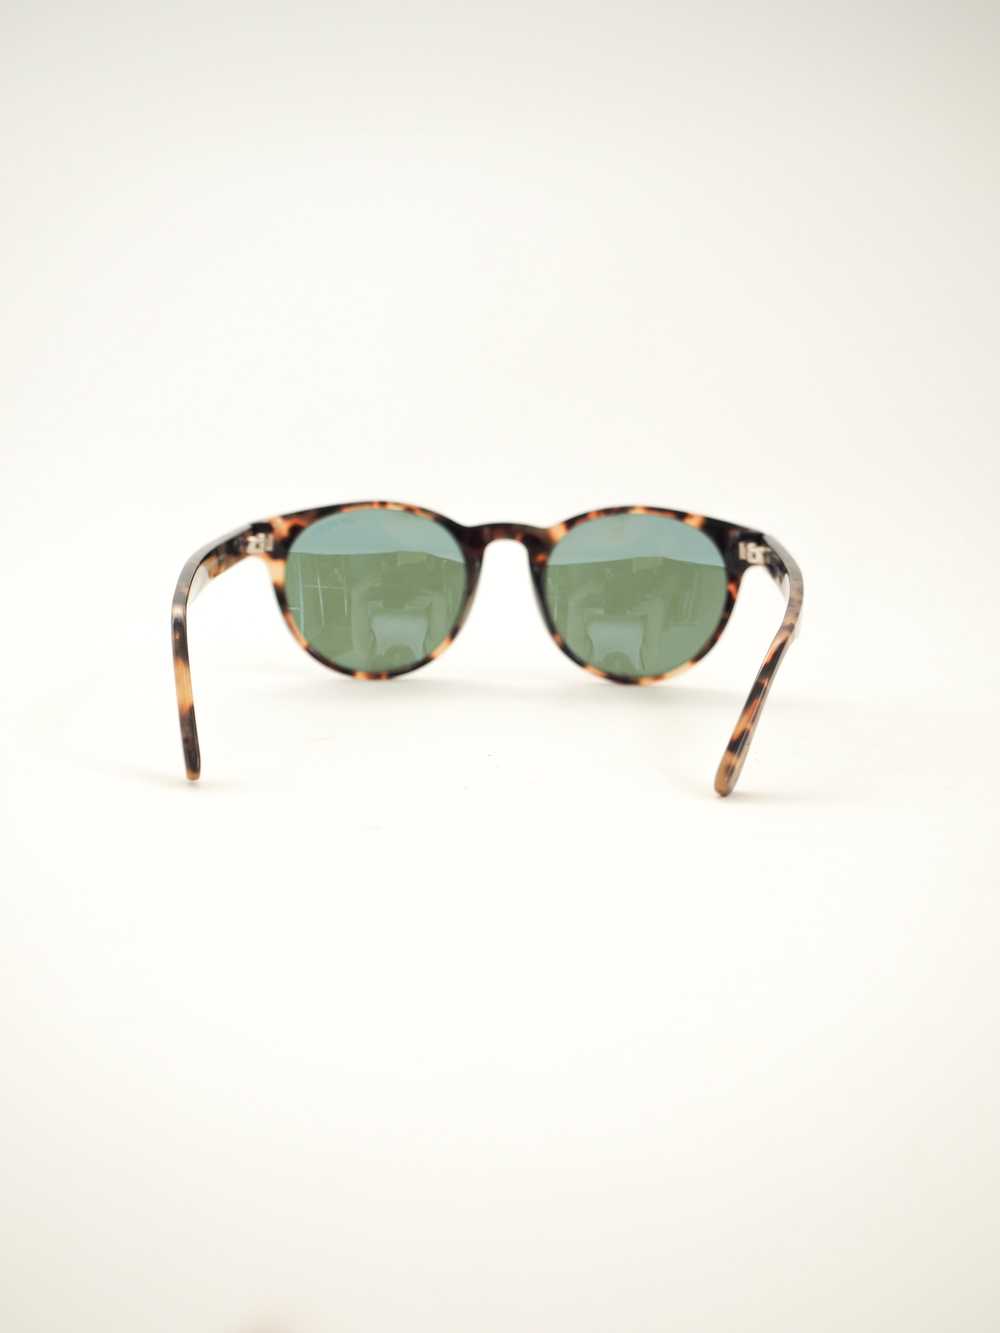 Tom Ford Tortoise Shell Round Sunglasses - image 4